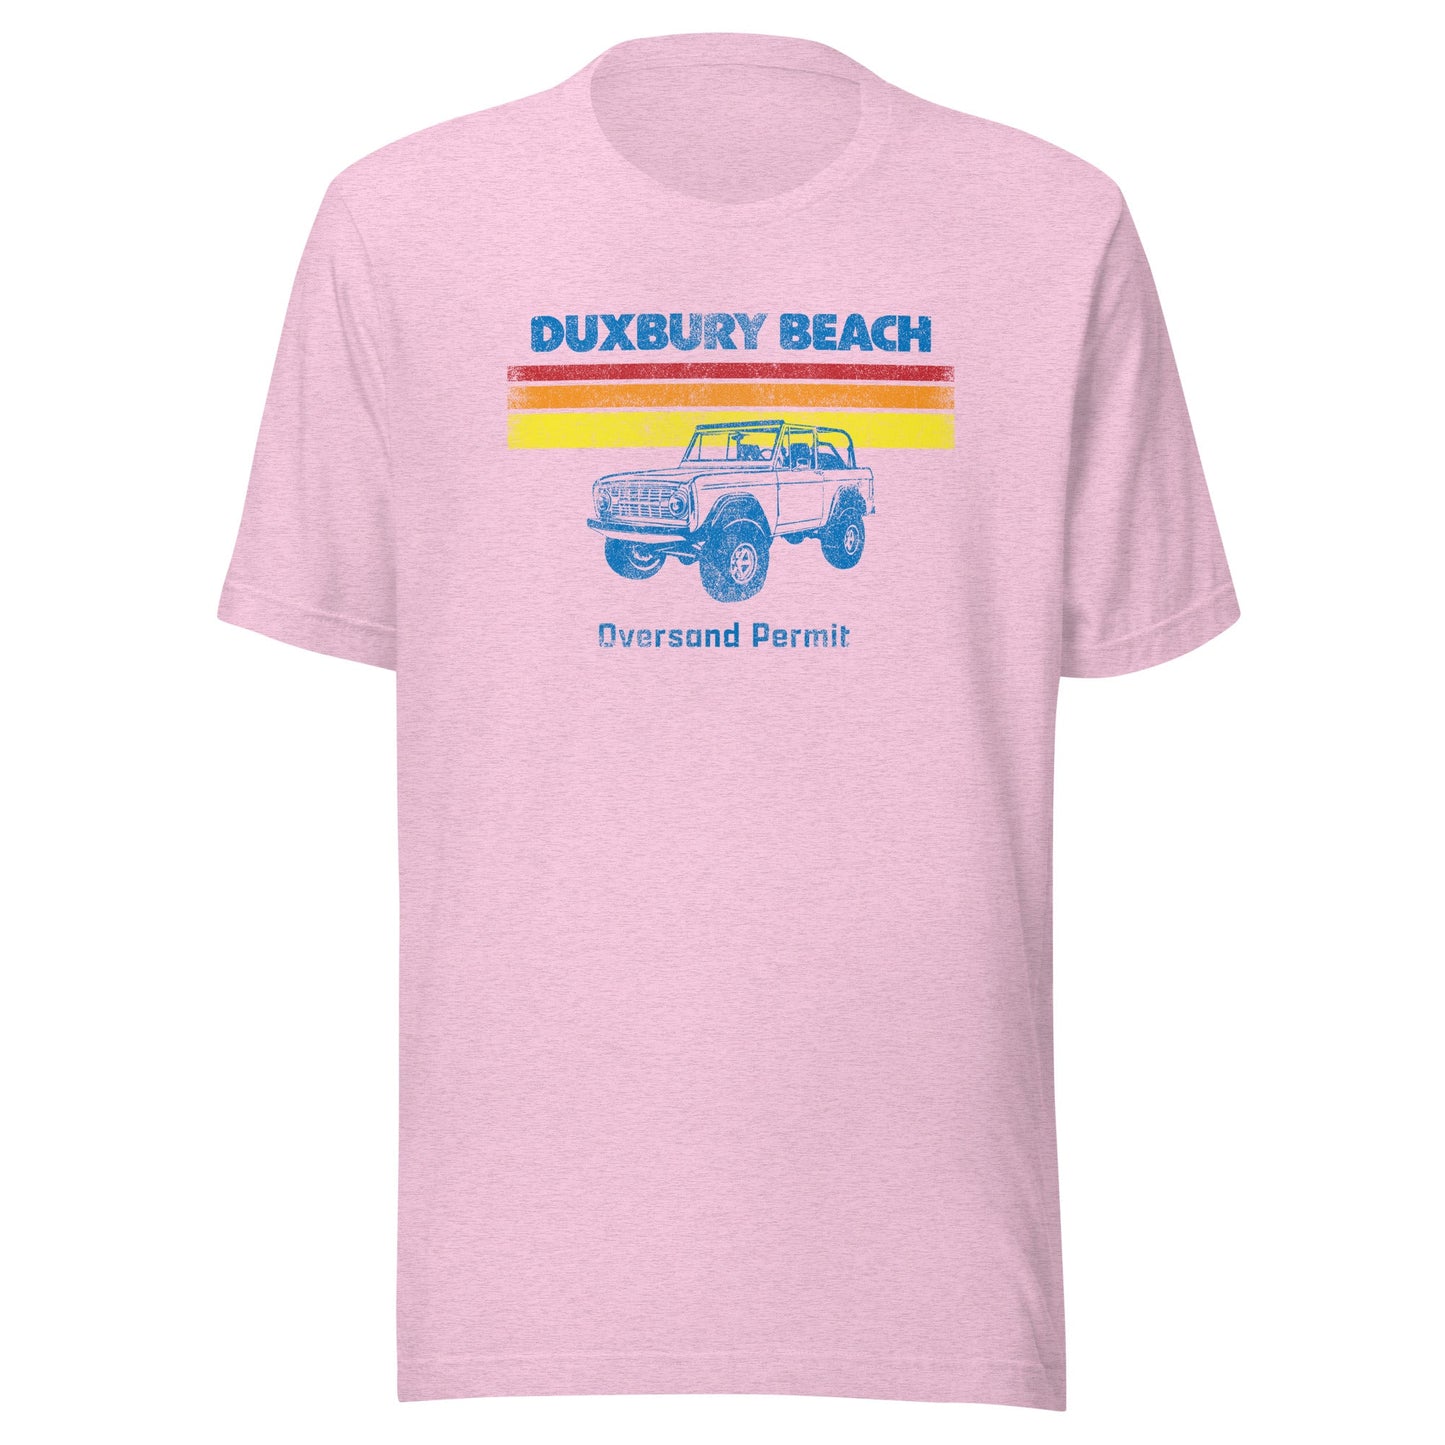 Duxbury Beach Oversand T-Shirt - Retro Jeep Beach Tee